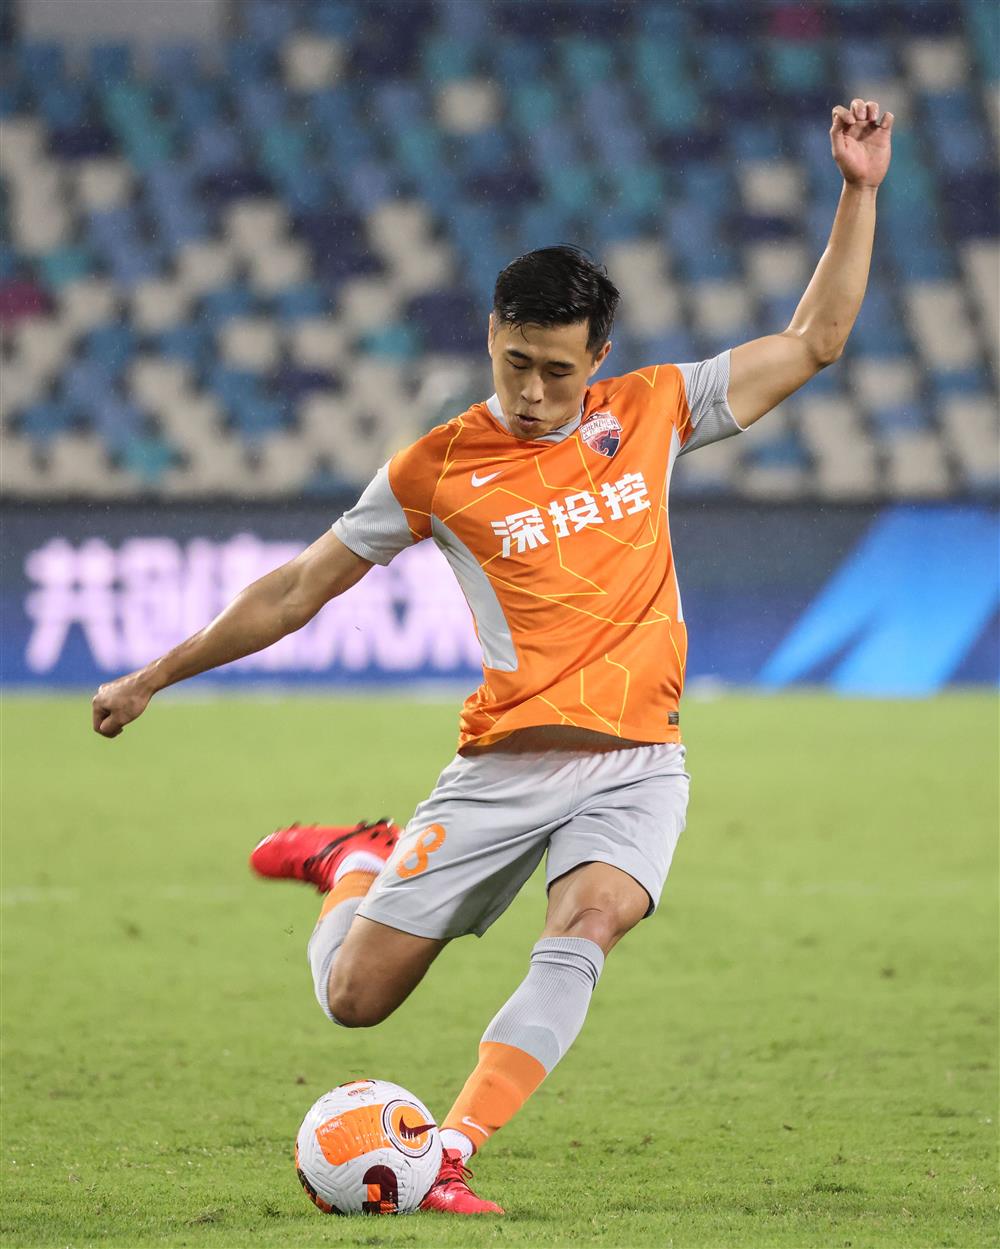 Wearing the number 9 jersey, Beijing Youth Sports: naturalized player Dai Weijun has signed a contract with Shanghai Shenhua for naturalization | Shenzhen team | Dai Weijun